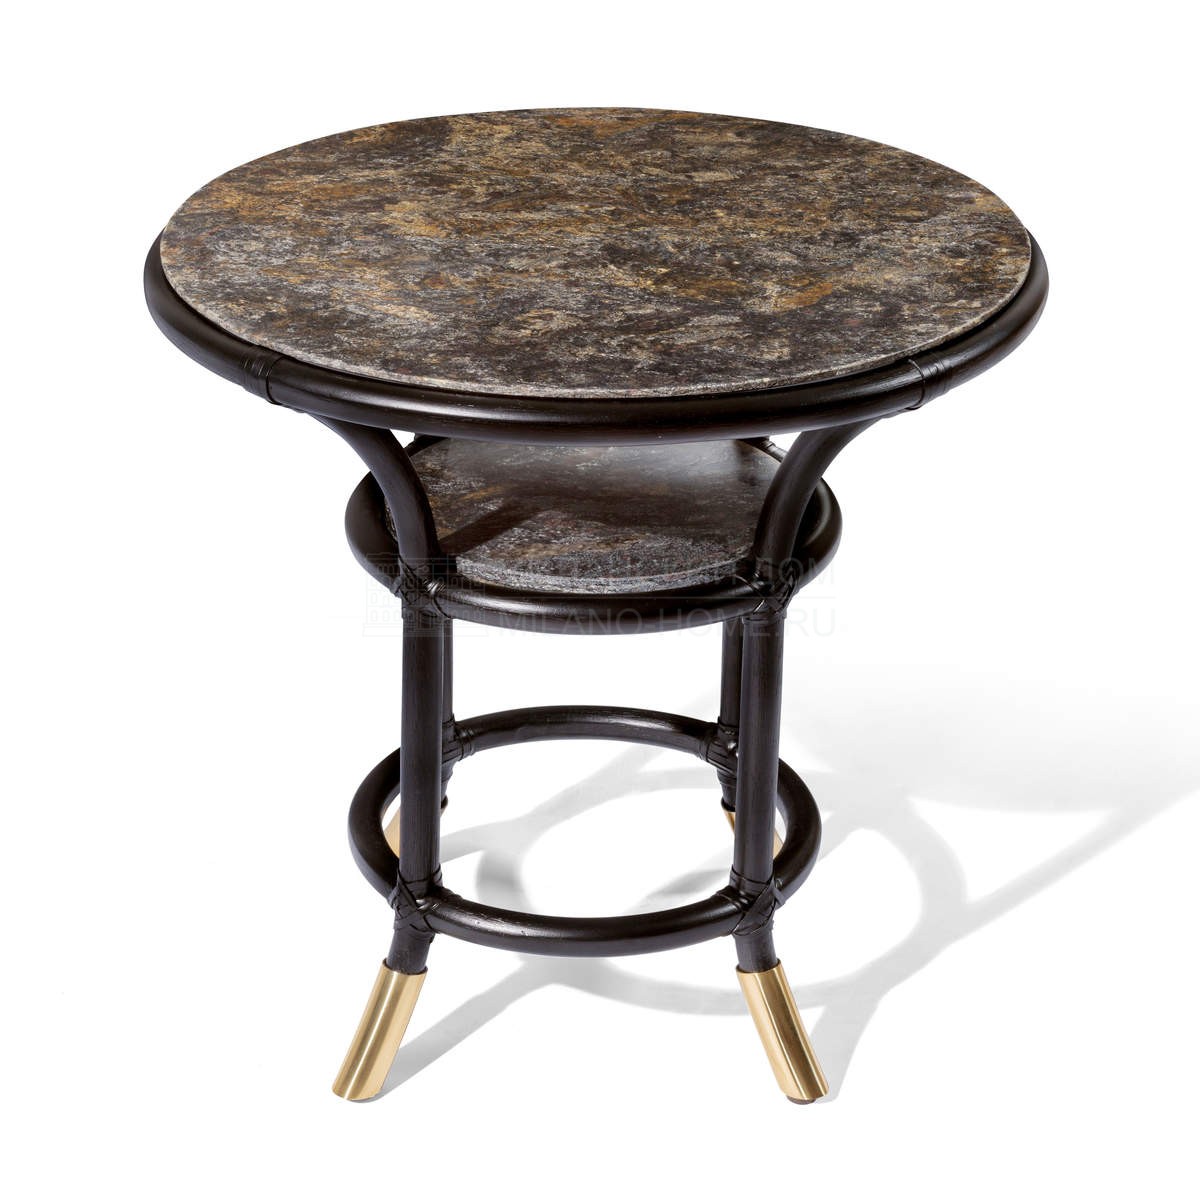 Кофейный столик Farnese table из Италии фабрики IPE CAVALLI VISIONNAIRE